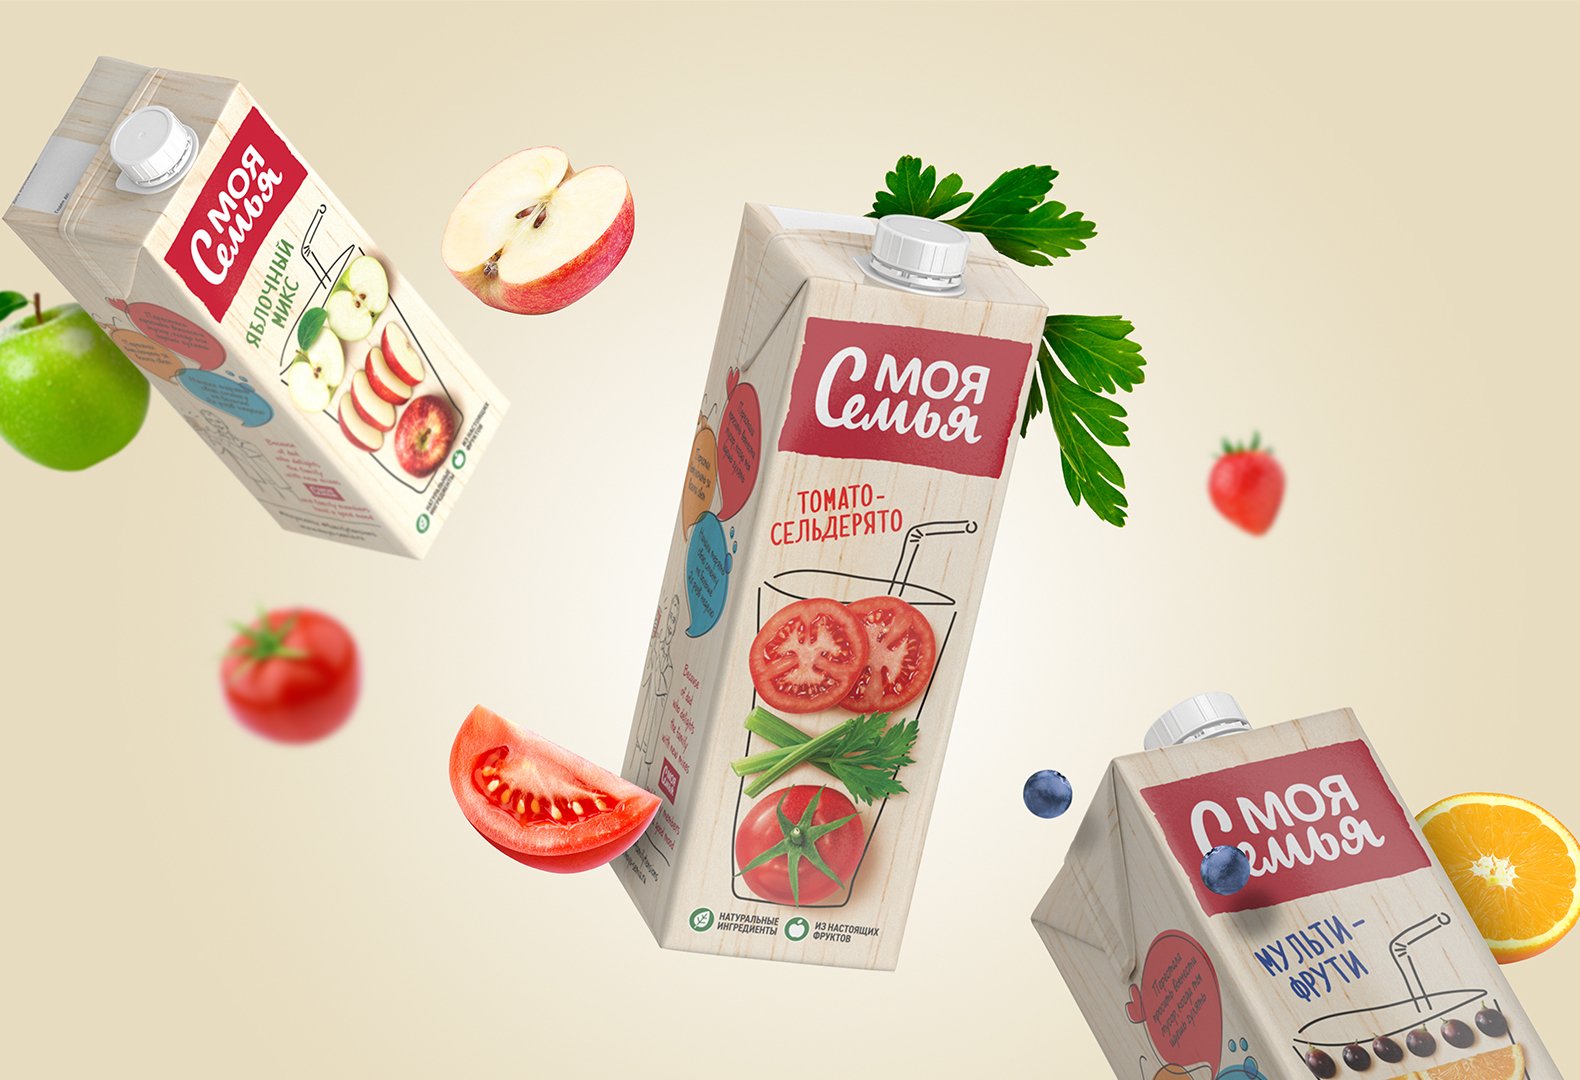 Moya Semya rebranded juices and fruit drinks floating between fresh fruit and vegetables